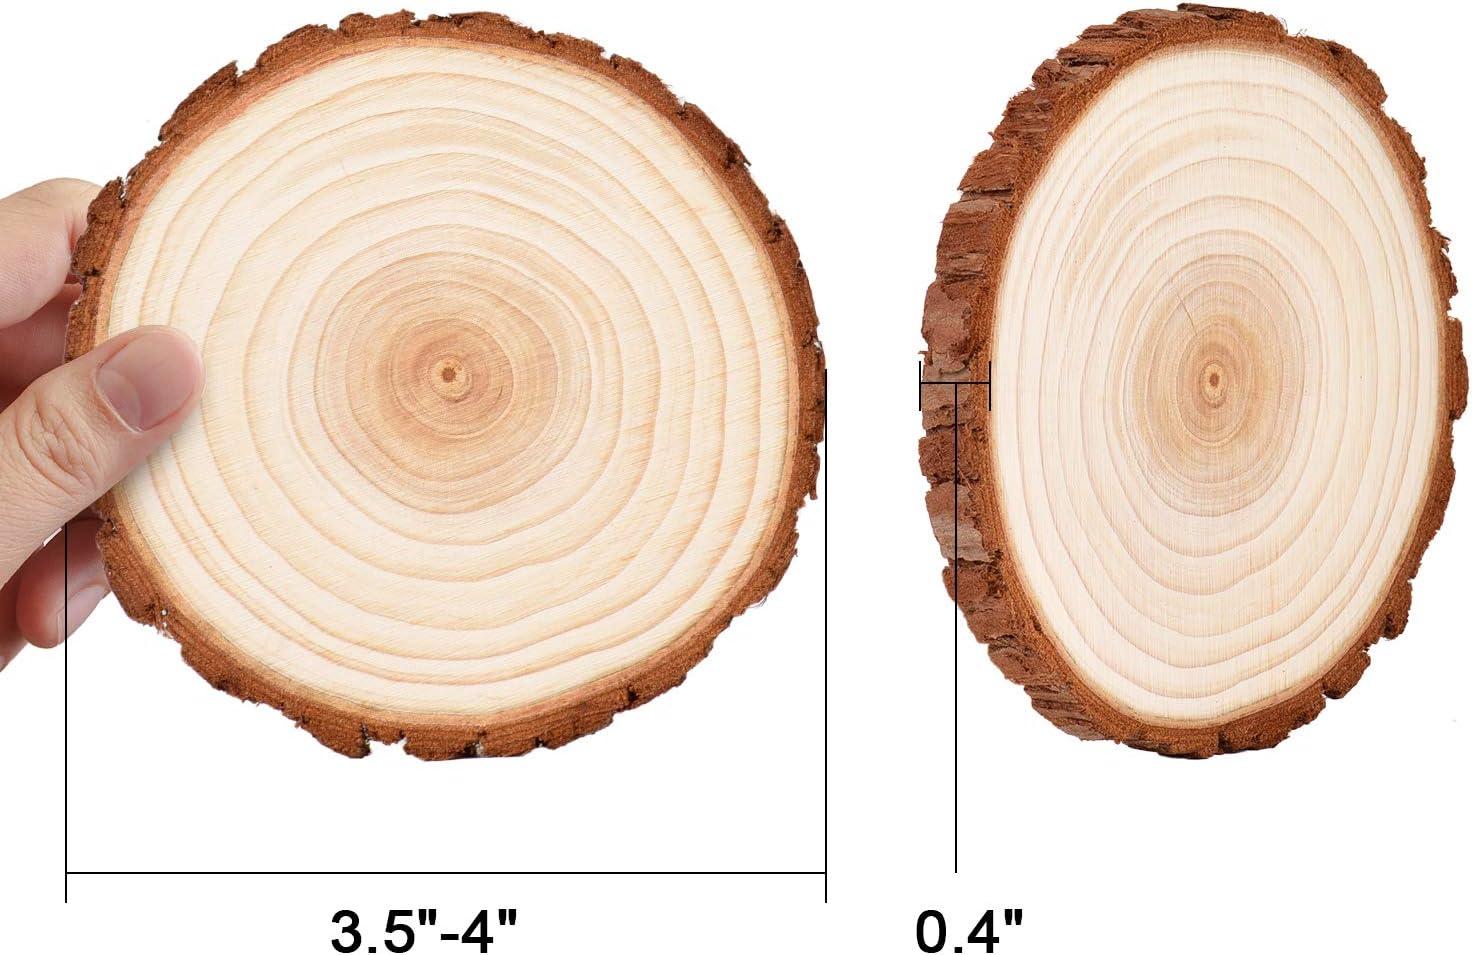 7-inch wood slice - Rustic Wood Slices